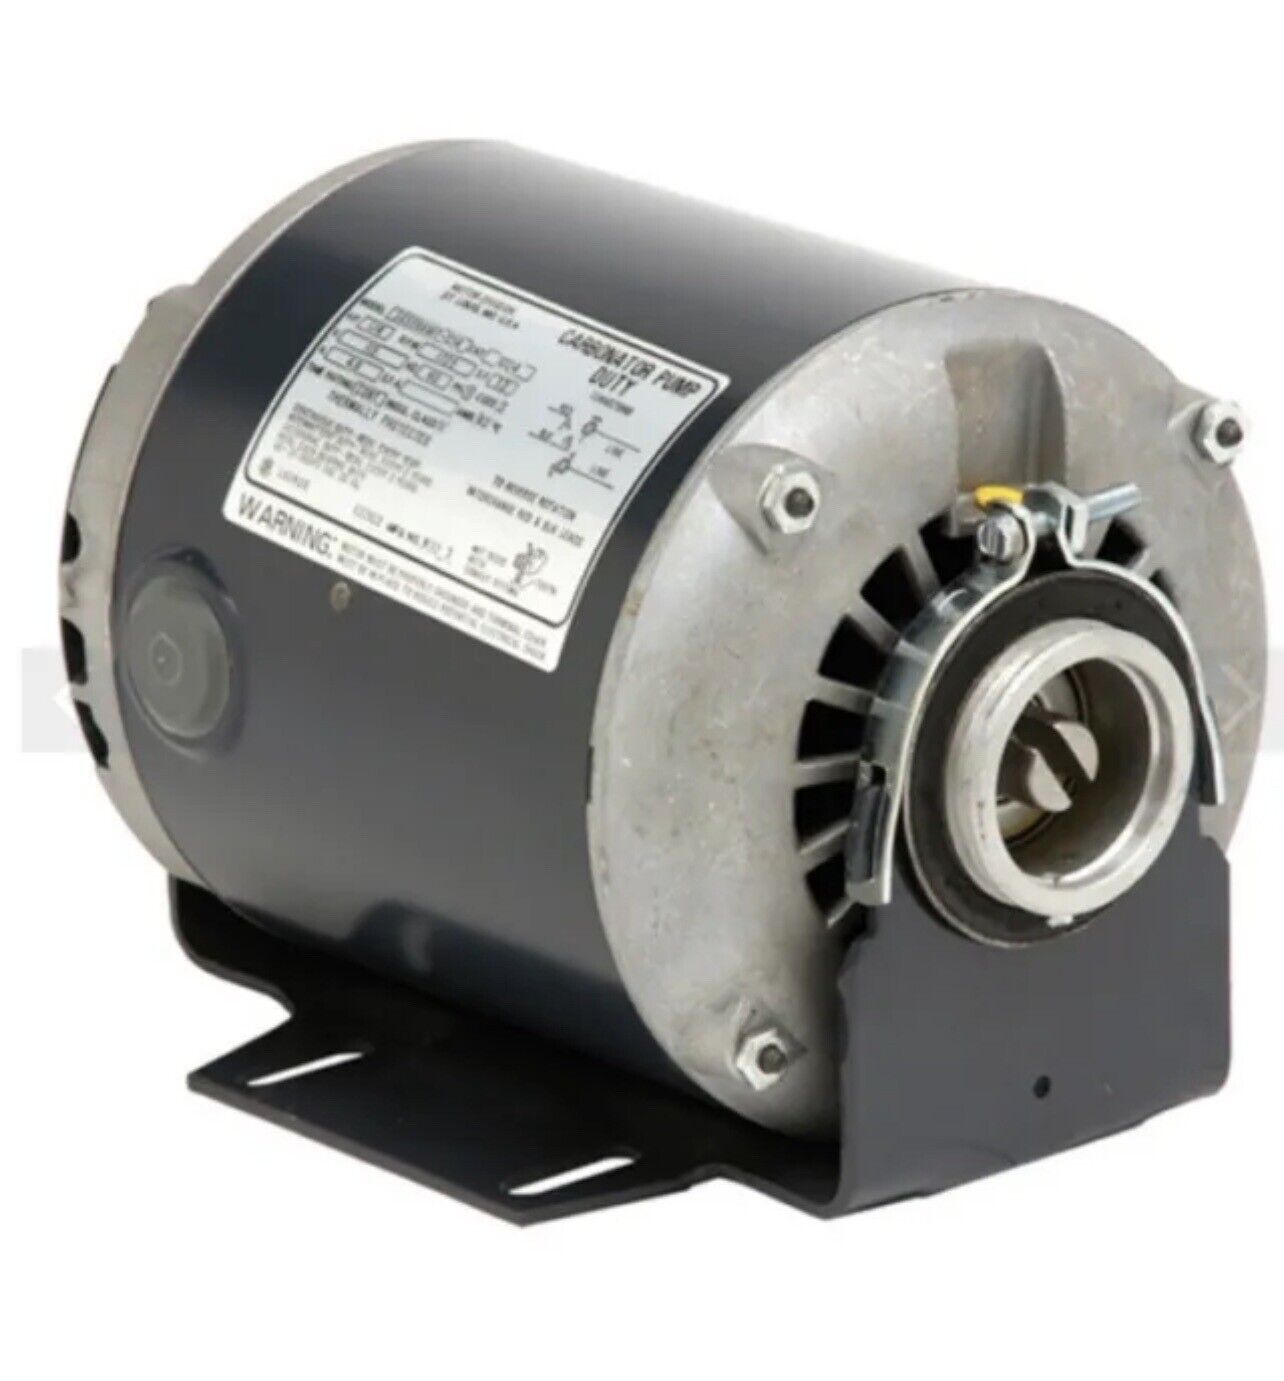 NEW US Motors 6079 Carbonator Pump Motor; 1/3 hp, 120/240V, 1800 RPM, 48 Frame